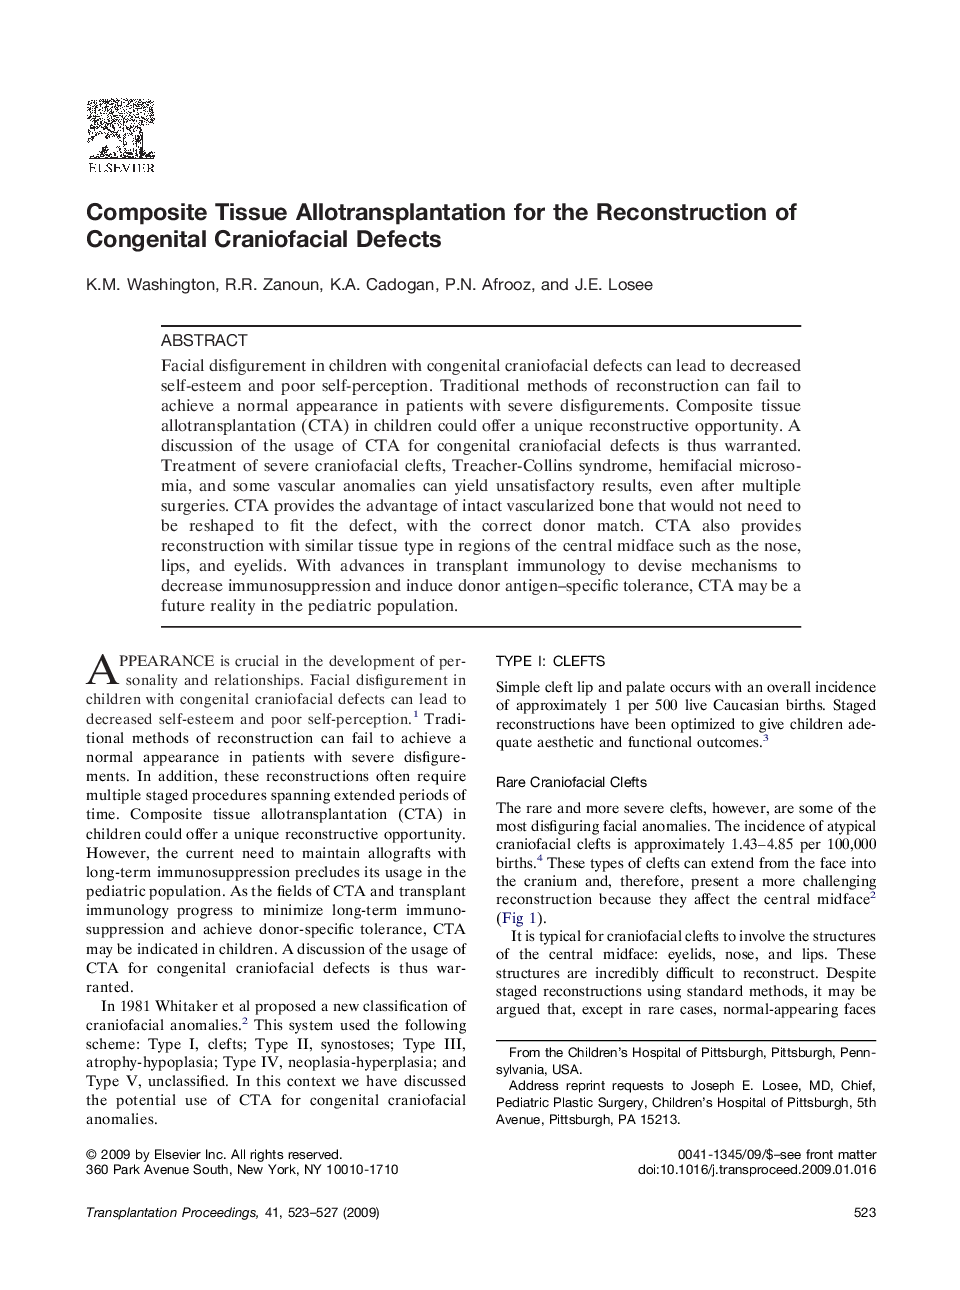 Composite Tissue Allotransplantation for the Reconstruction of Congenital Craniofacial Defects